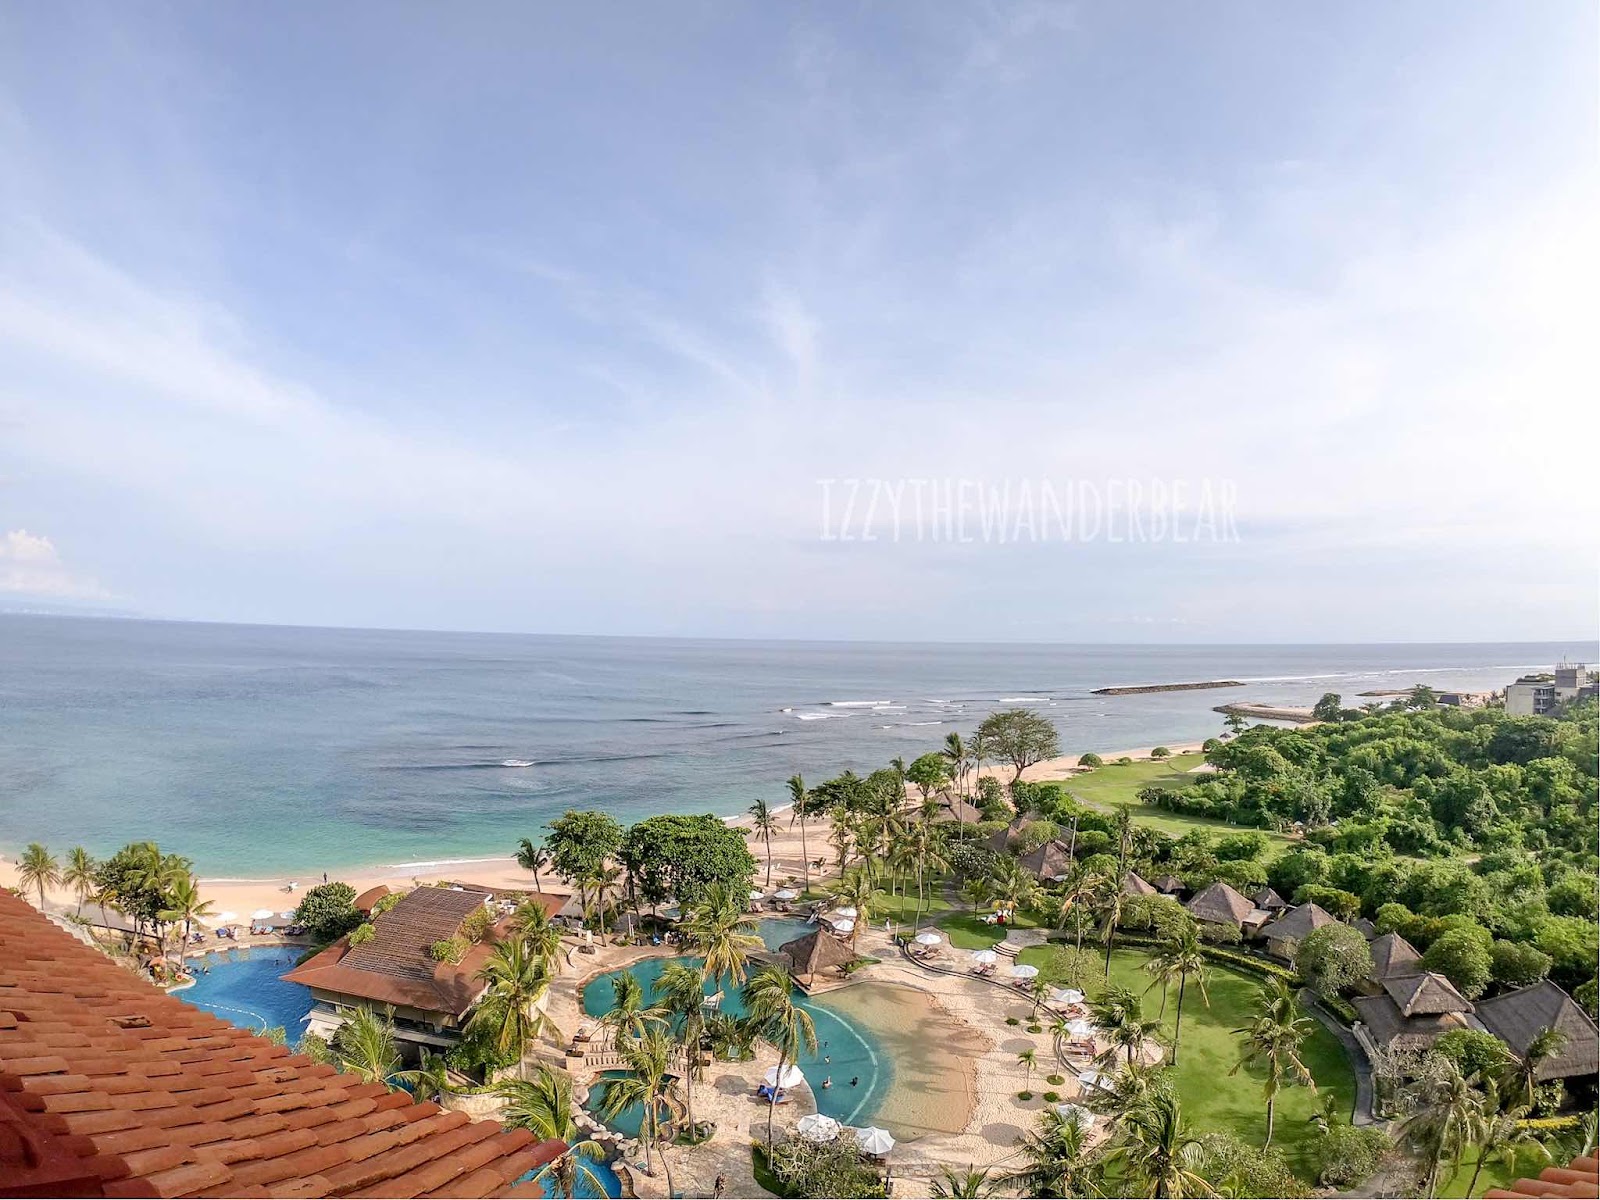 Hilton Bali Resort - Staycation - View